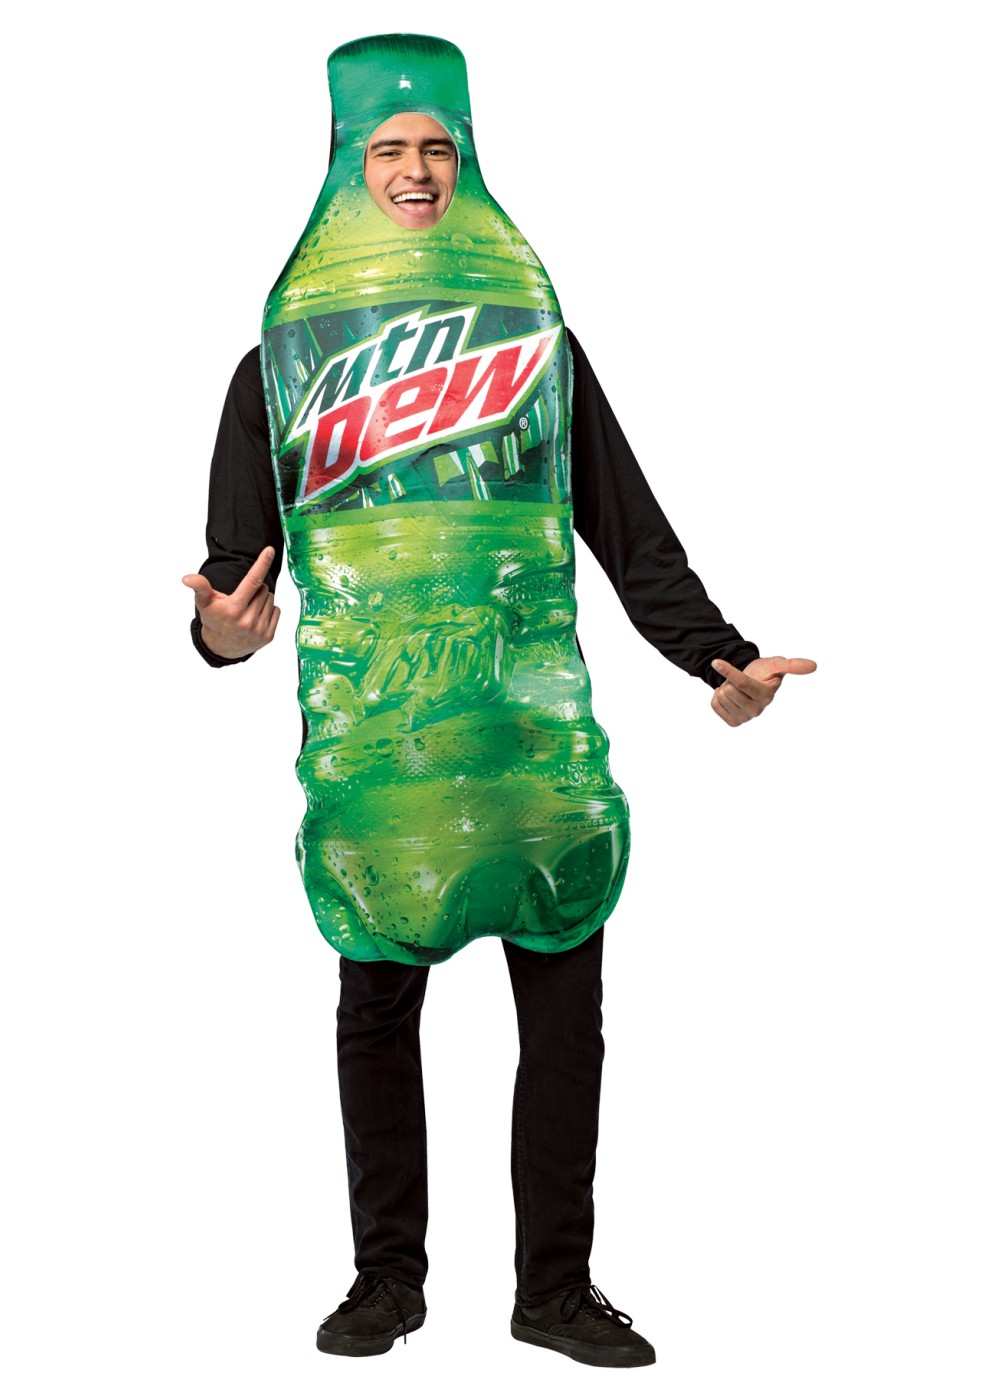 mountain-dew-bottle-mascot-costume.jpg